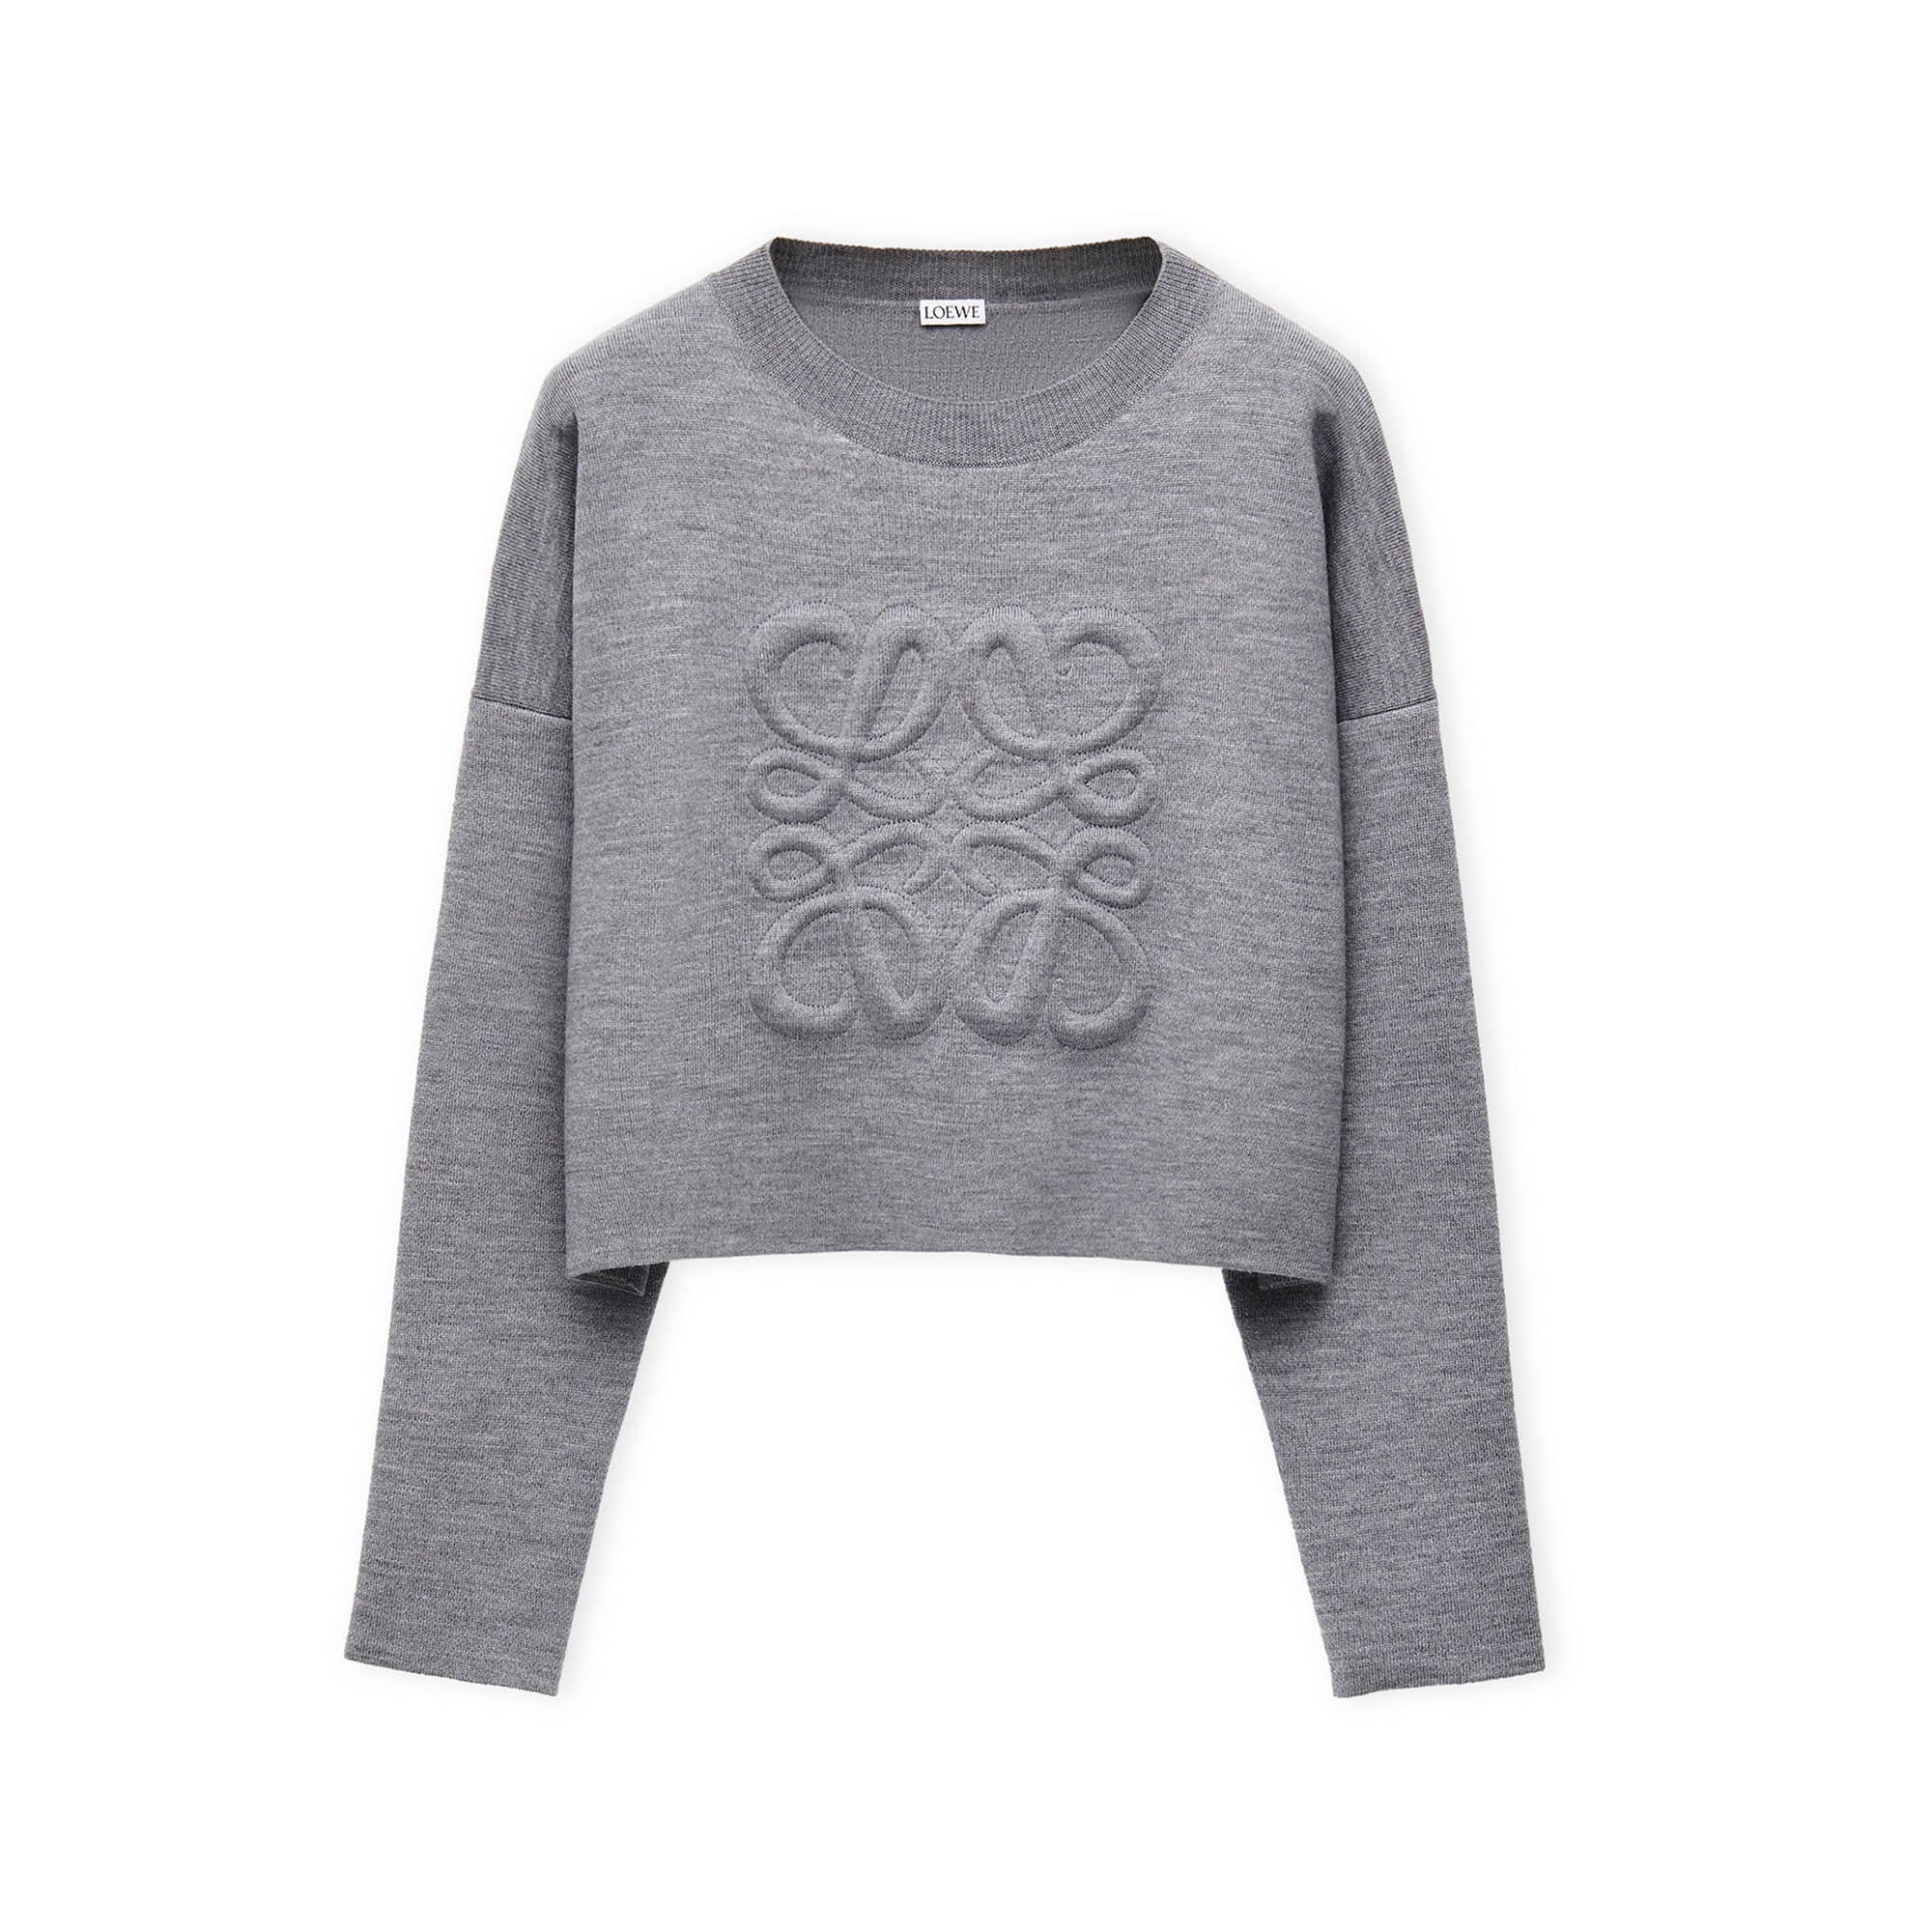 Loewe - Women’s Anagram Sweater - (Light Grey) view 1